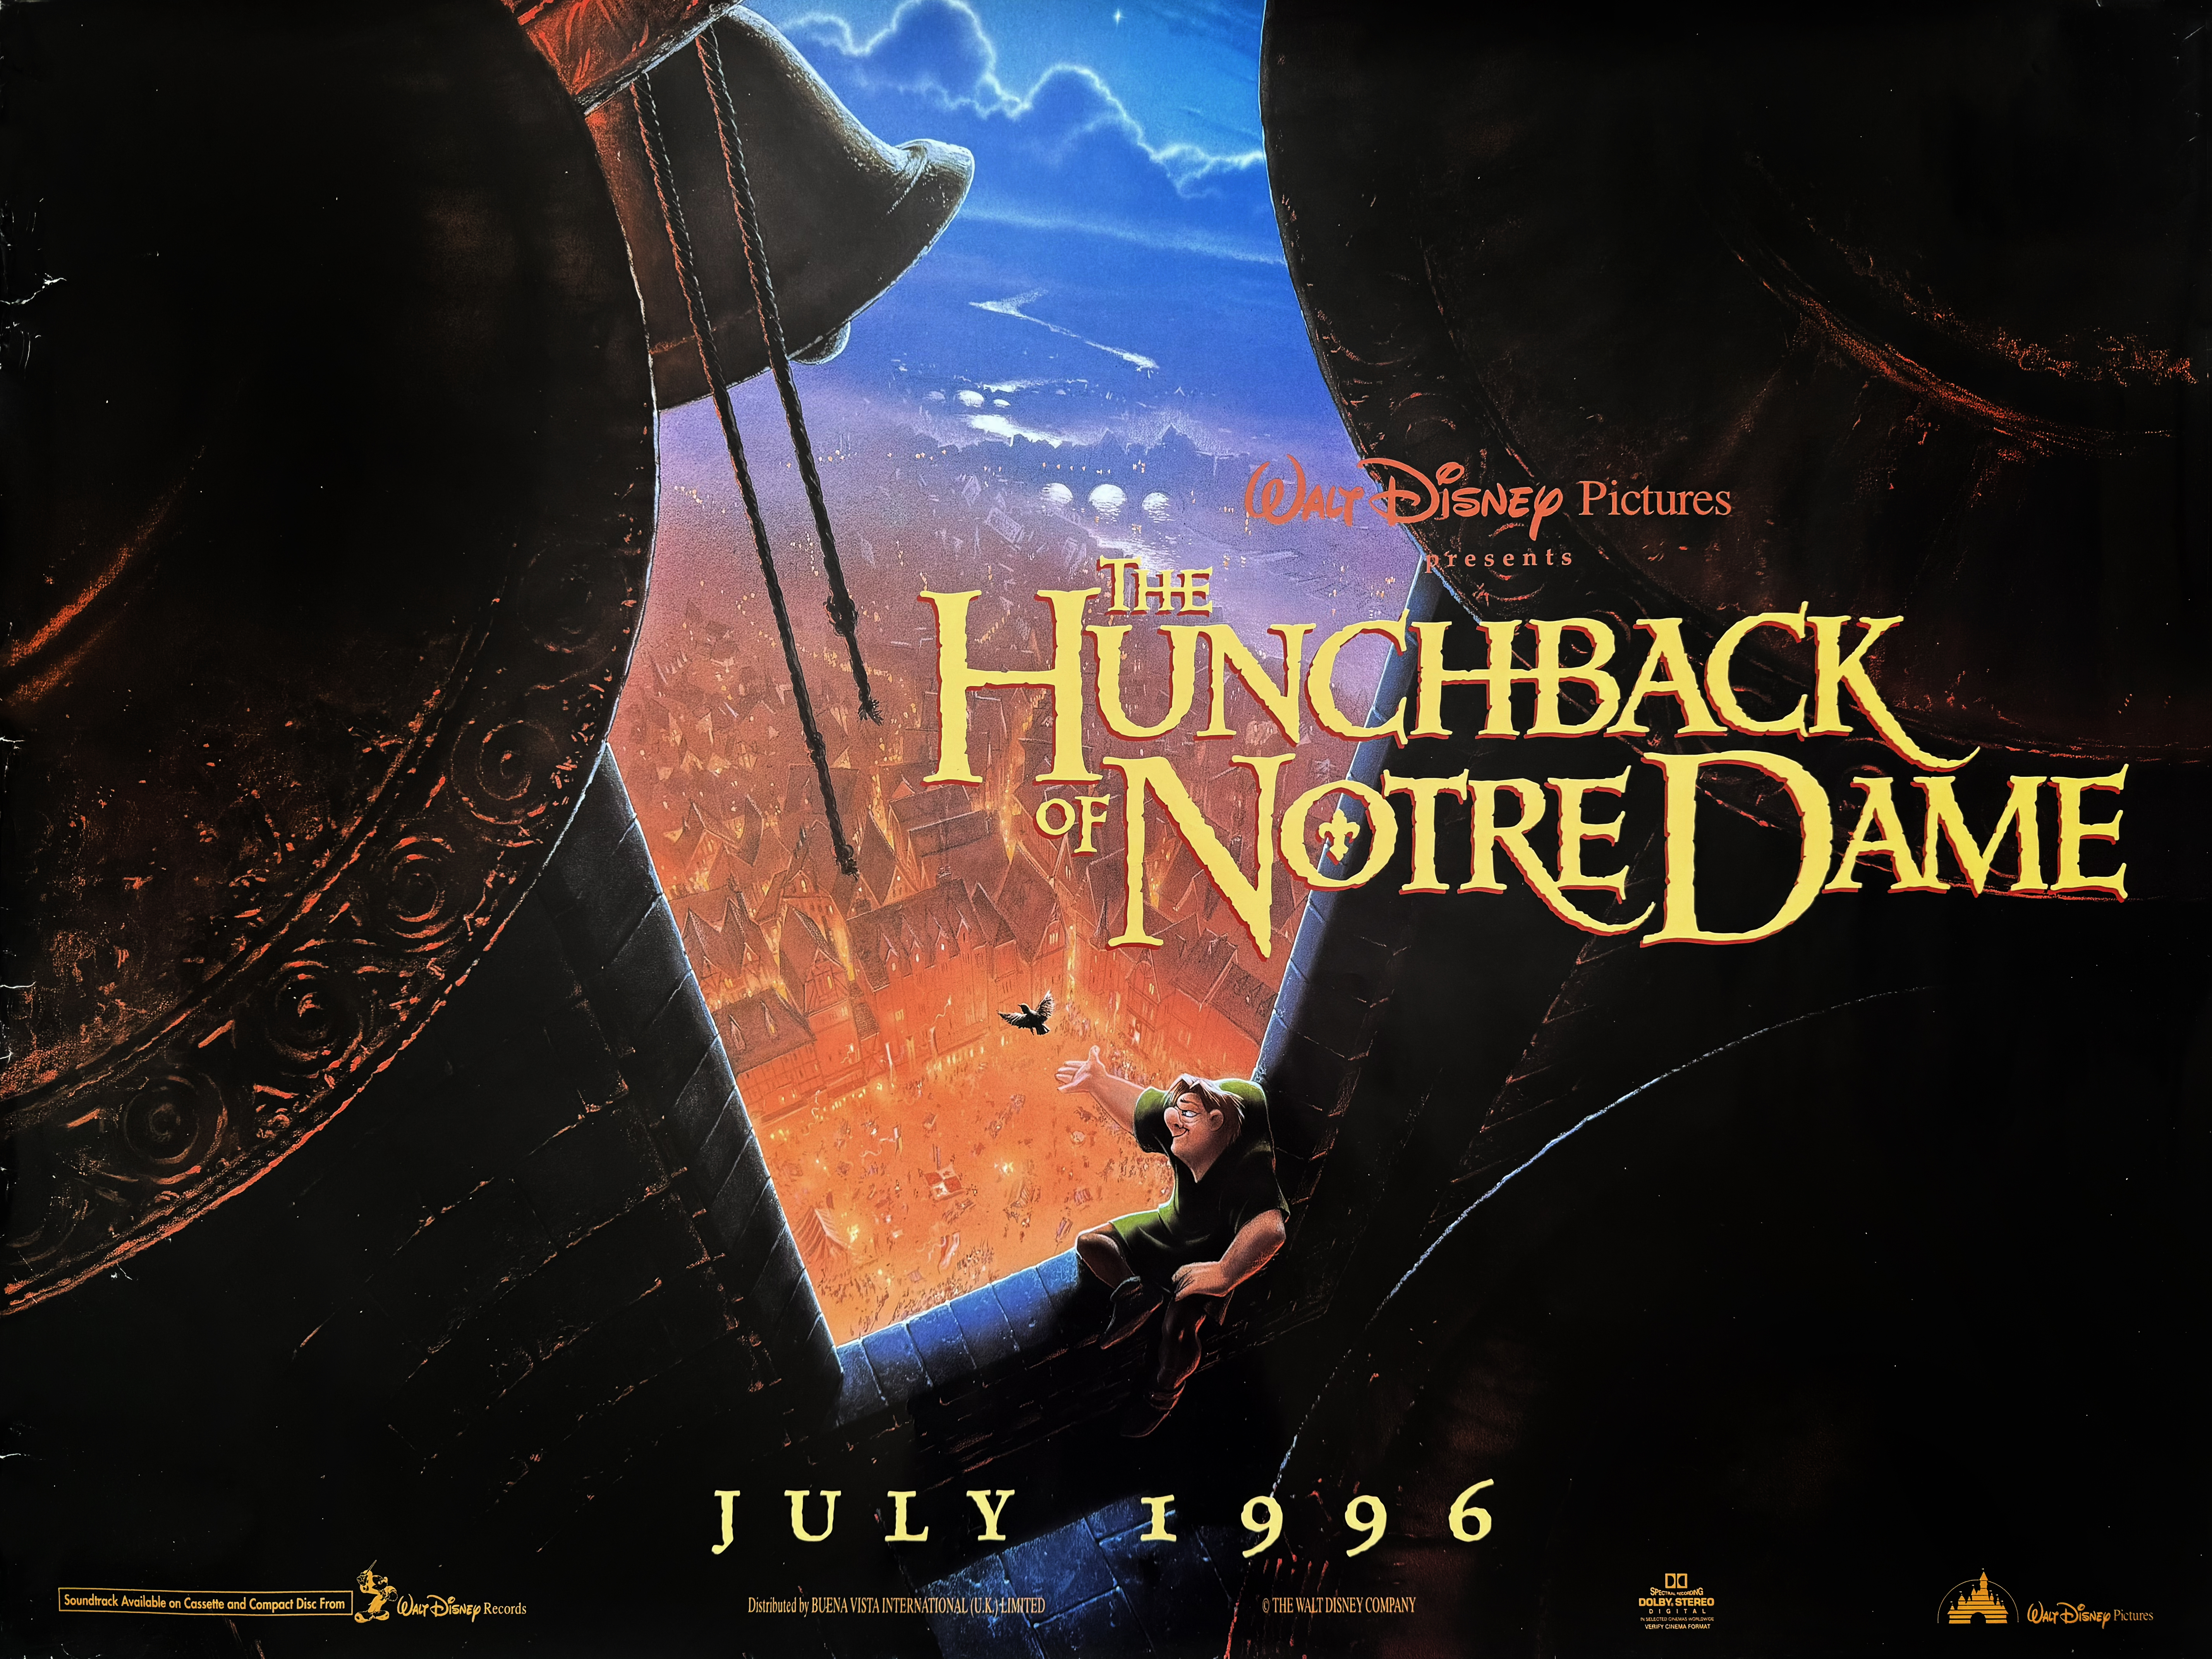  Hunchback Of Notre Dame movie quad poster